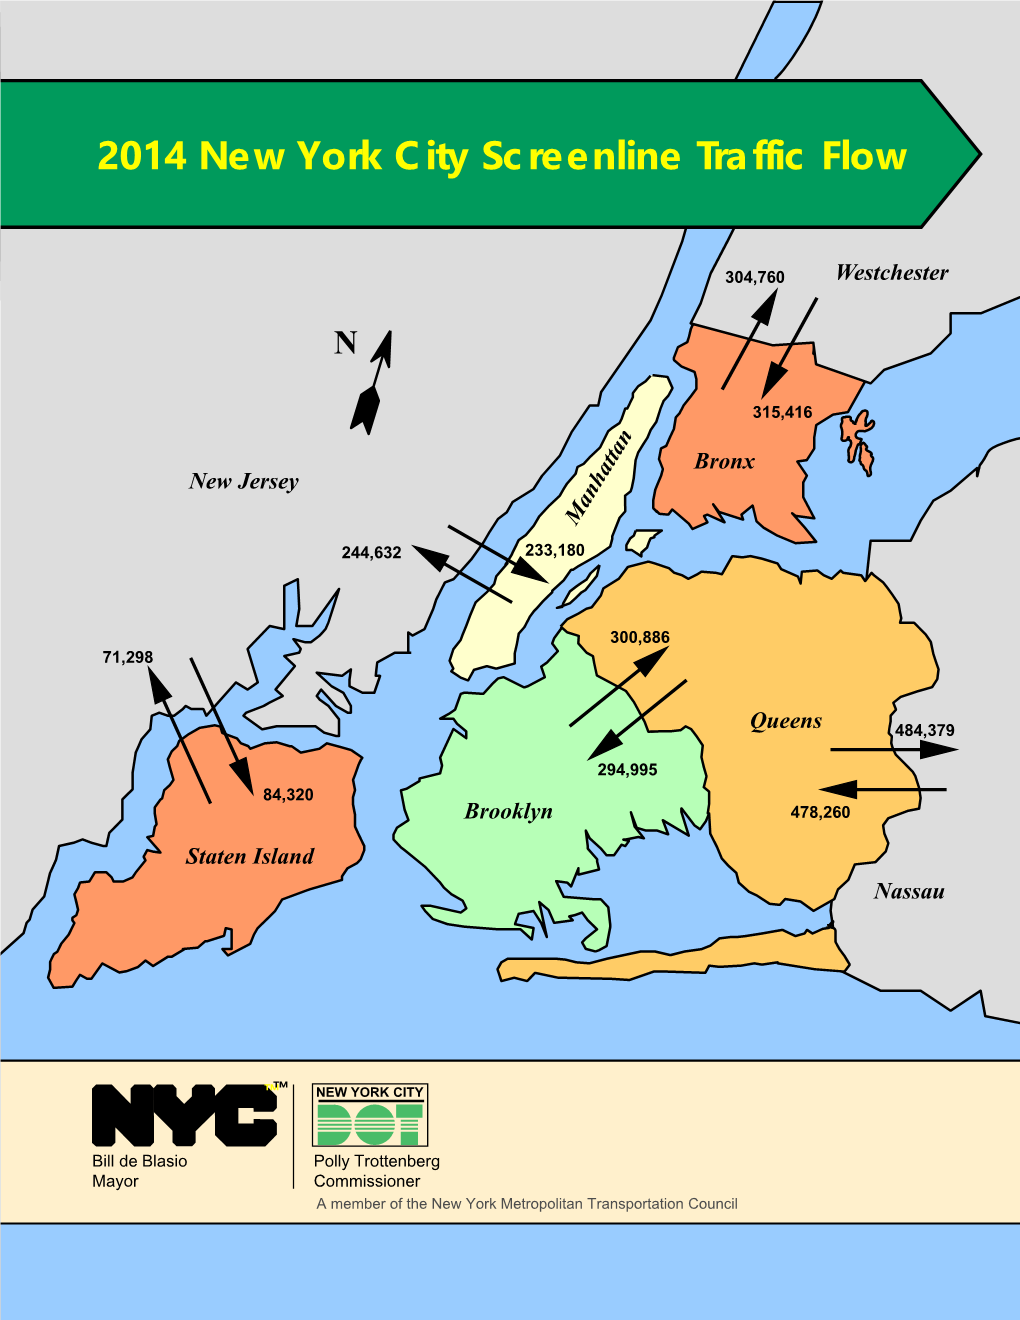 2014 New York City Screenline Traffic Flow